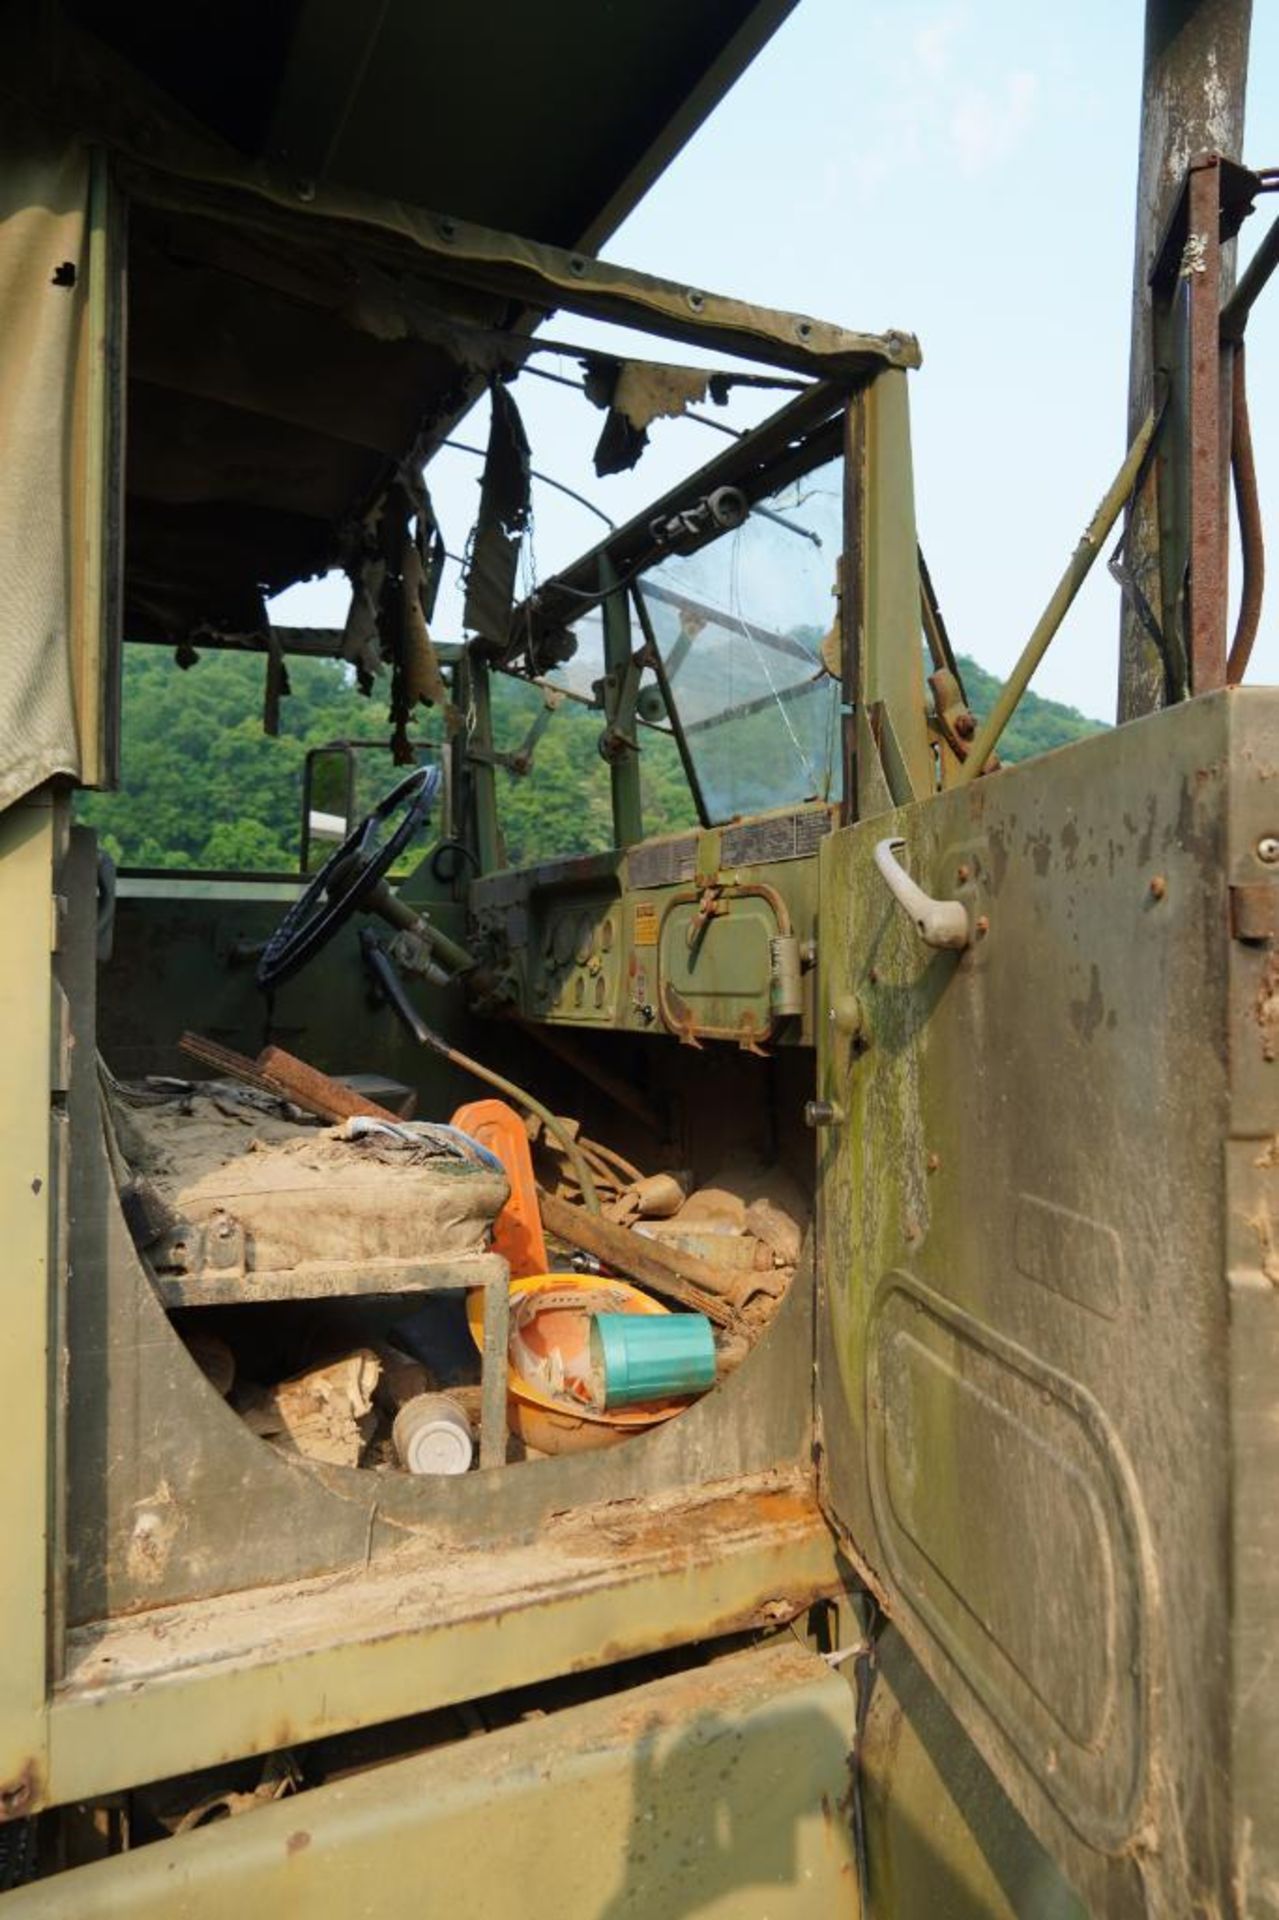 Military 6 x 6 Dump Truck - Image 44 of 50